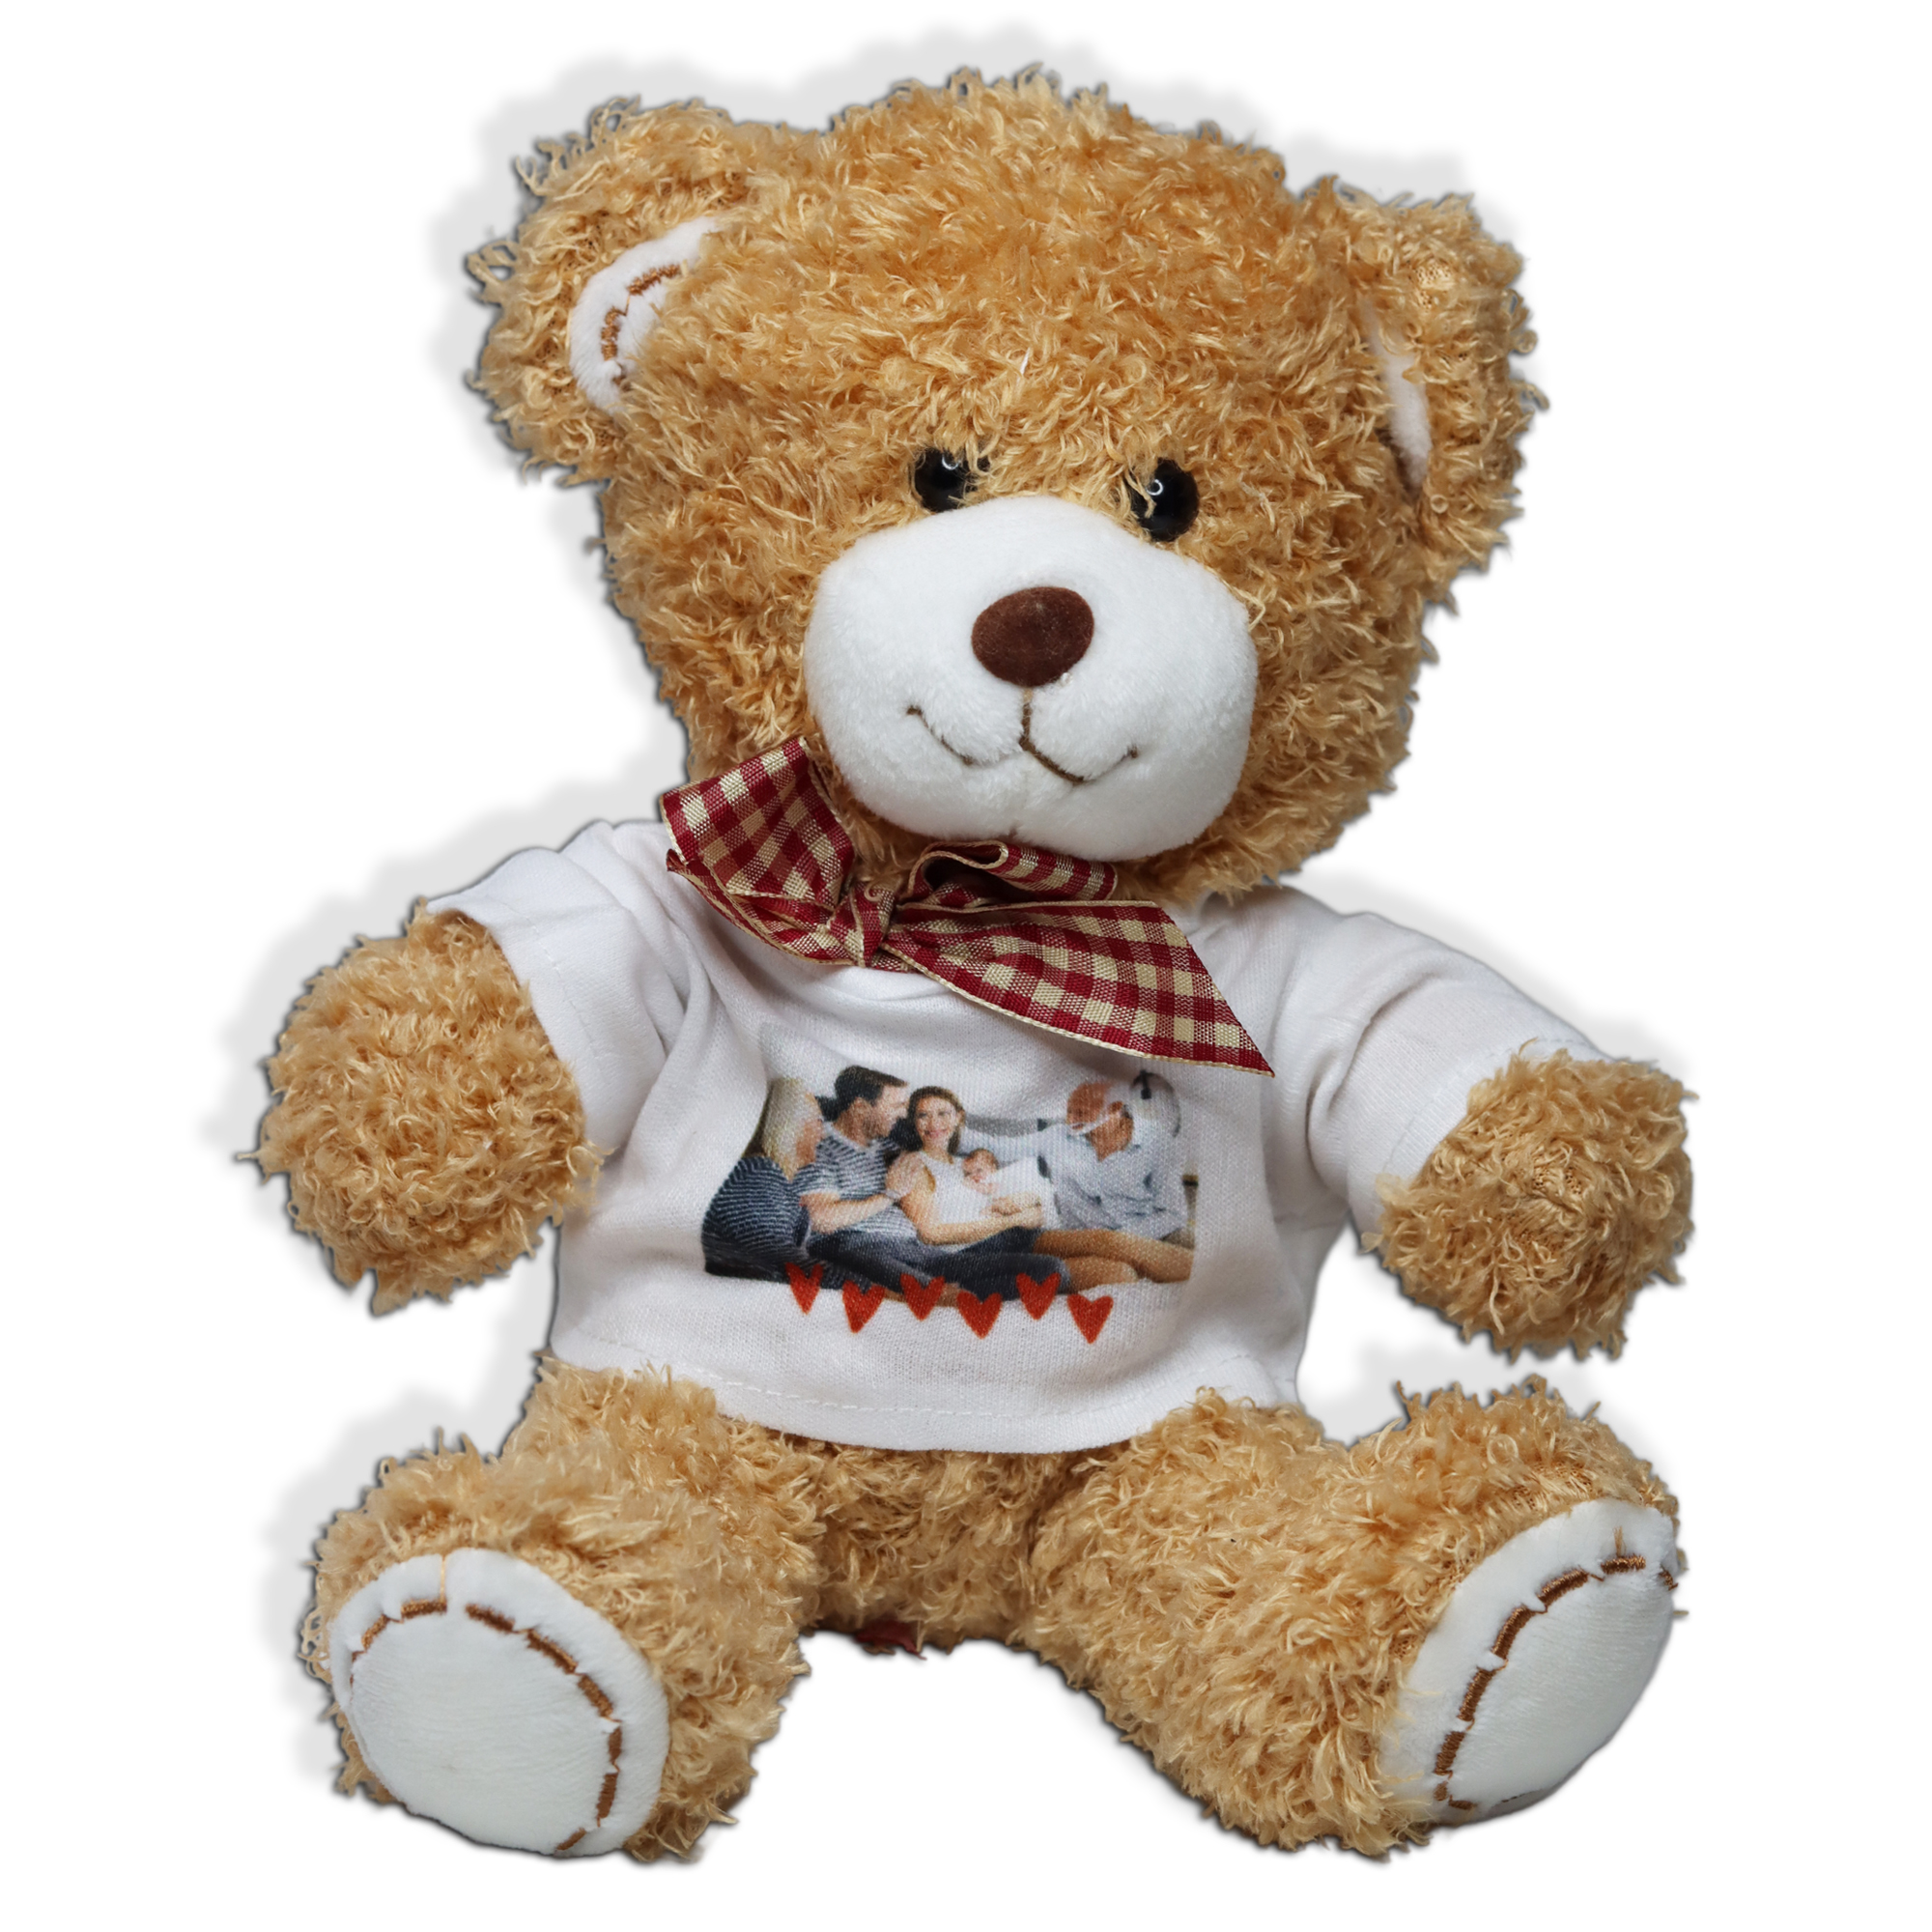 Personalised Photo Teddy Bear - Design Your Own Teddy Bear - Custom